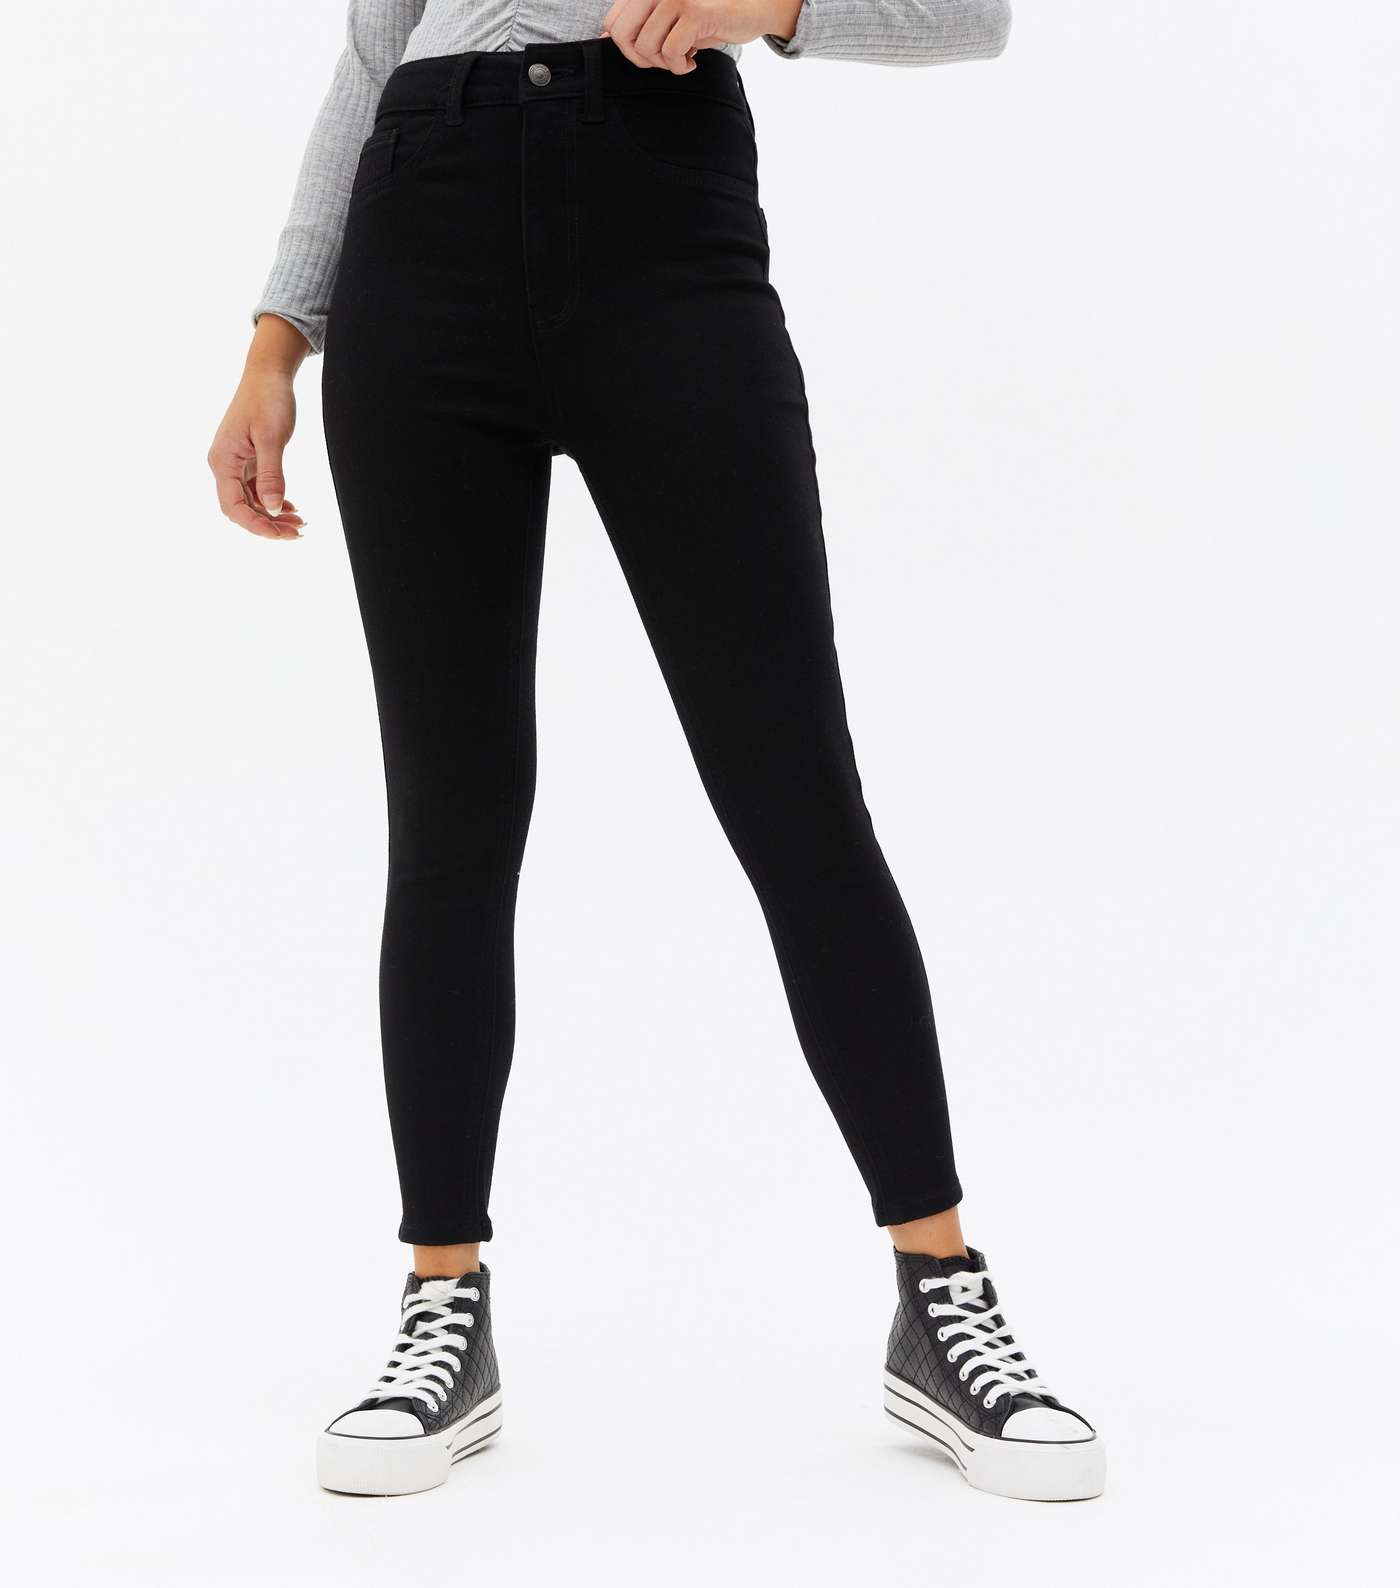 Petite Black Short High Waist Hallie Super Skinny Jeans Image 2